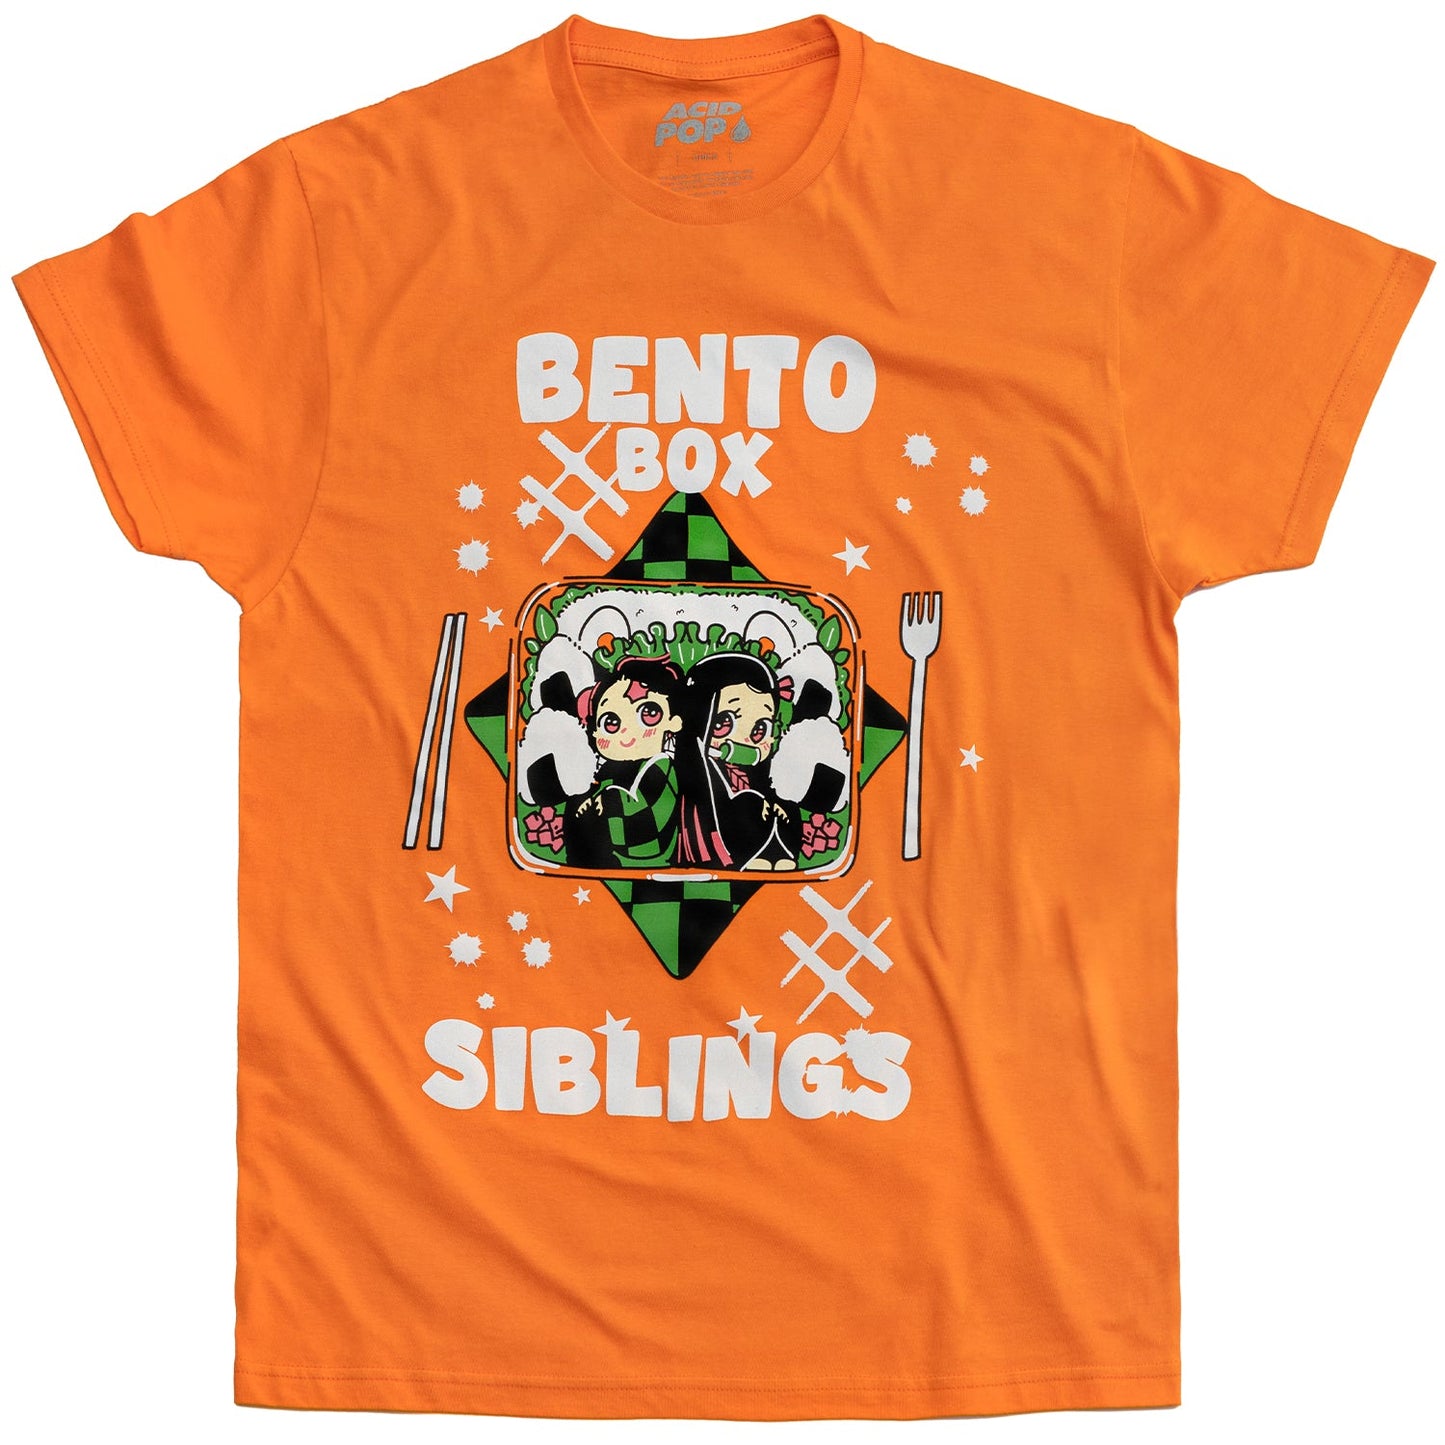 Playera Bento Box Siblings / Demon Slayer - Naranja